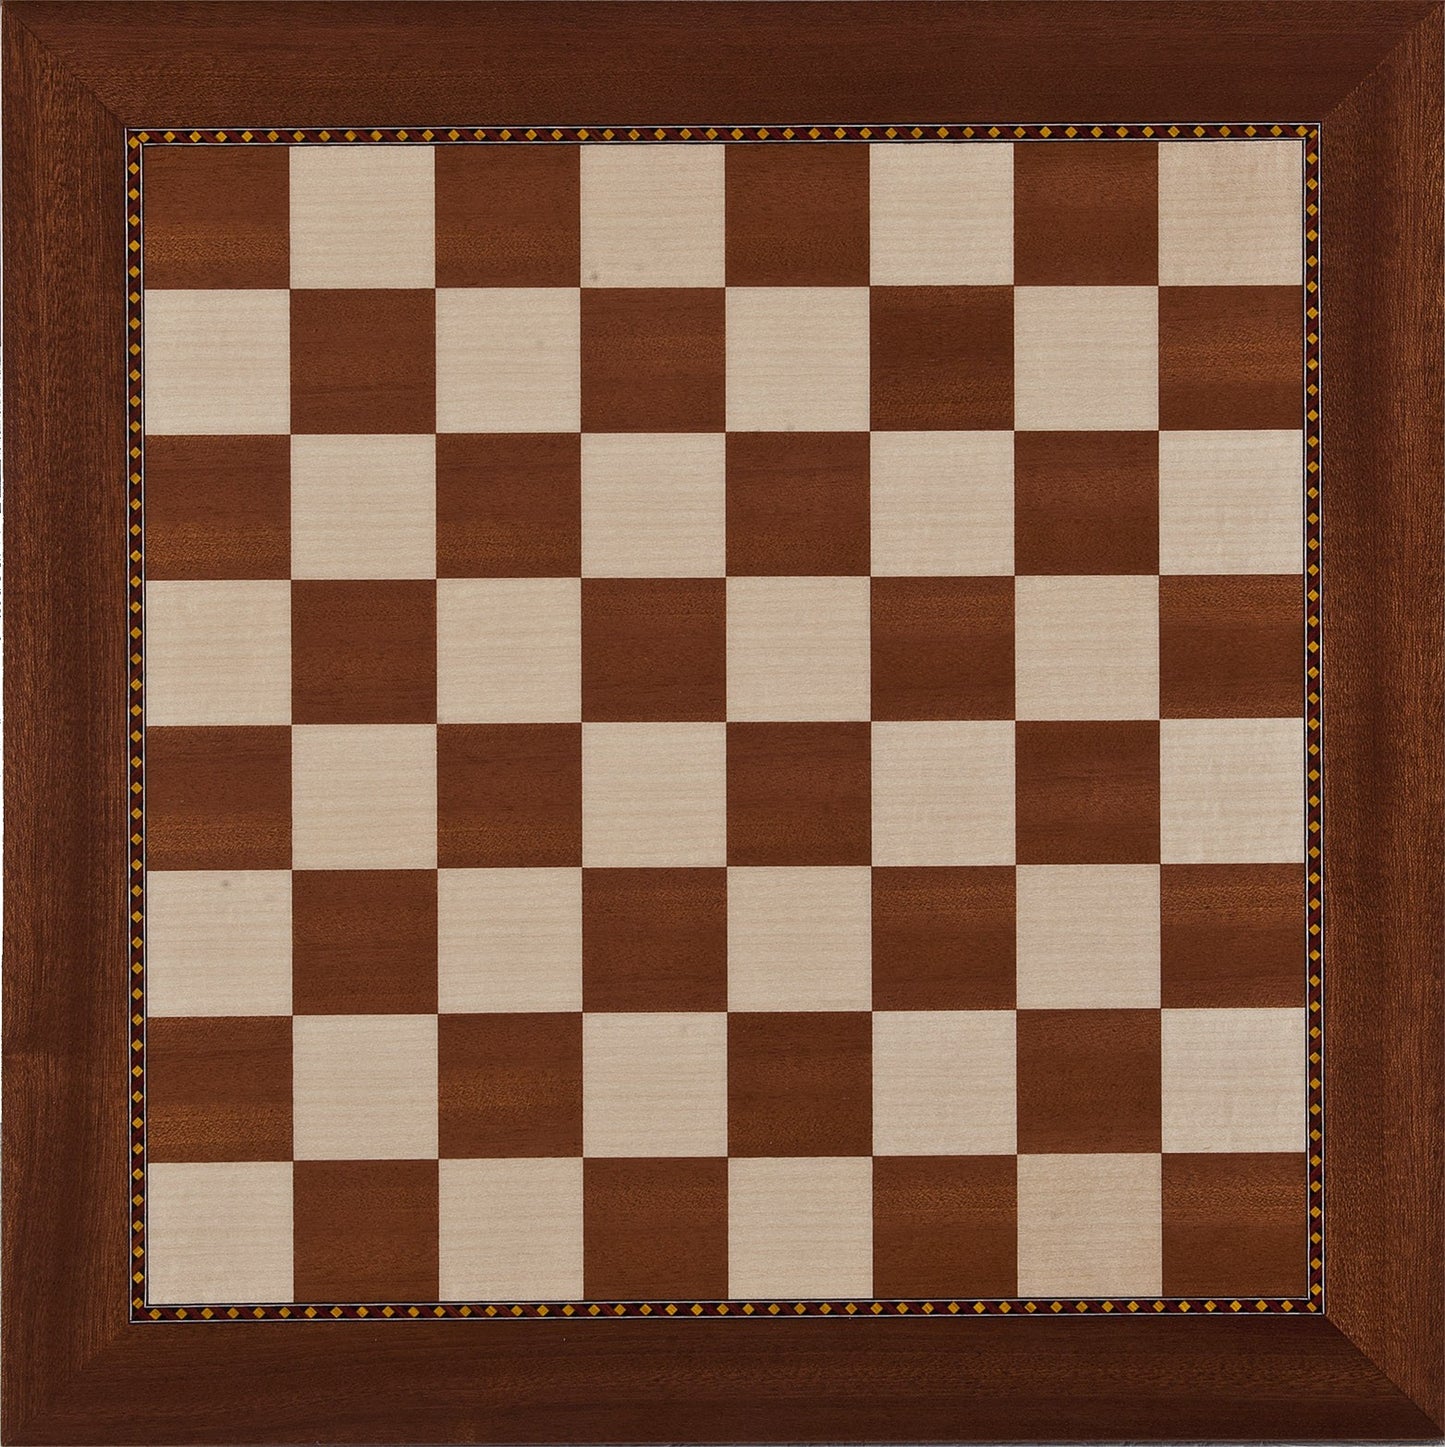 18 inch Designers Wood Chess Board